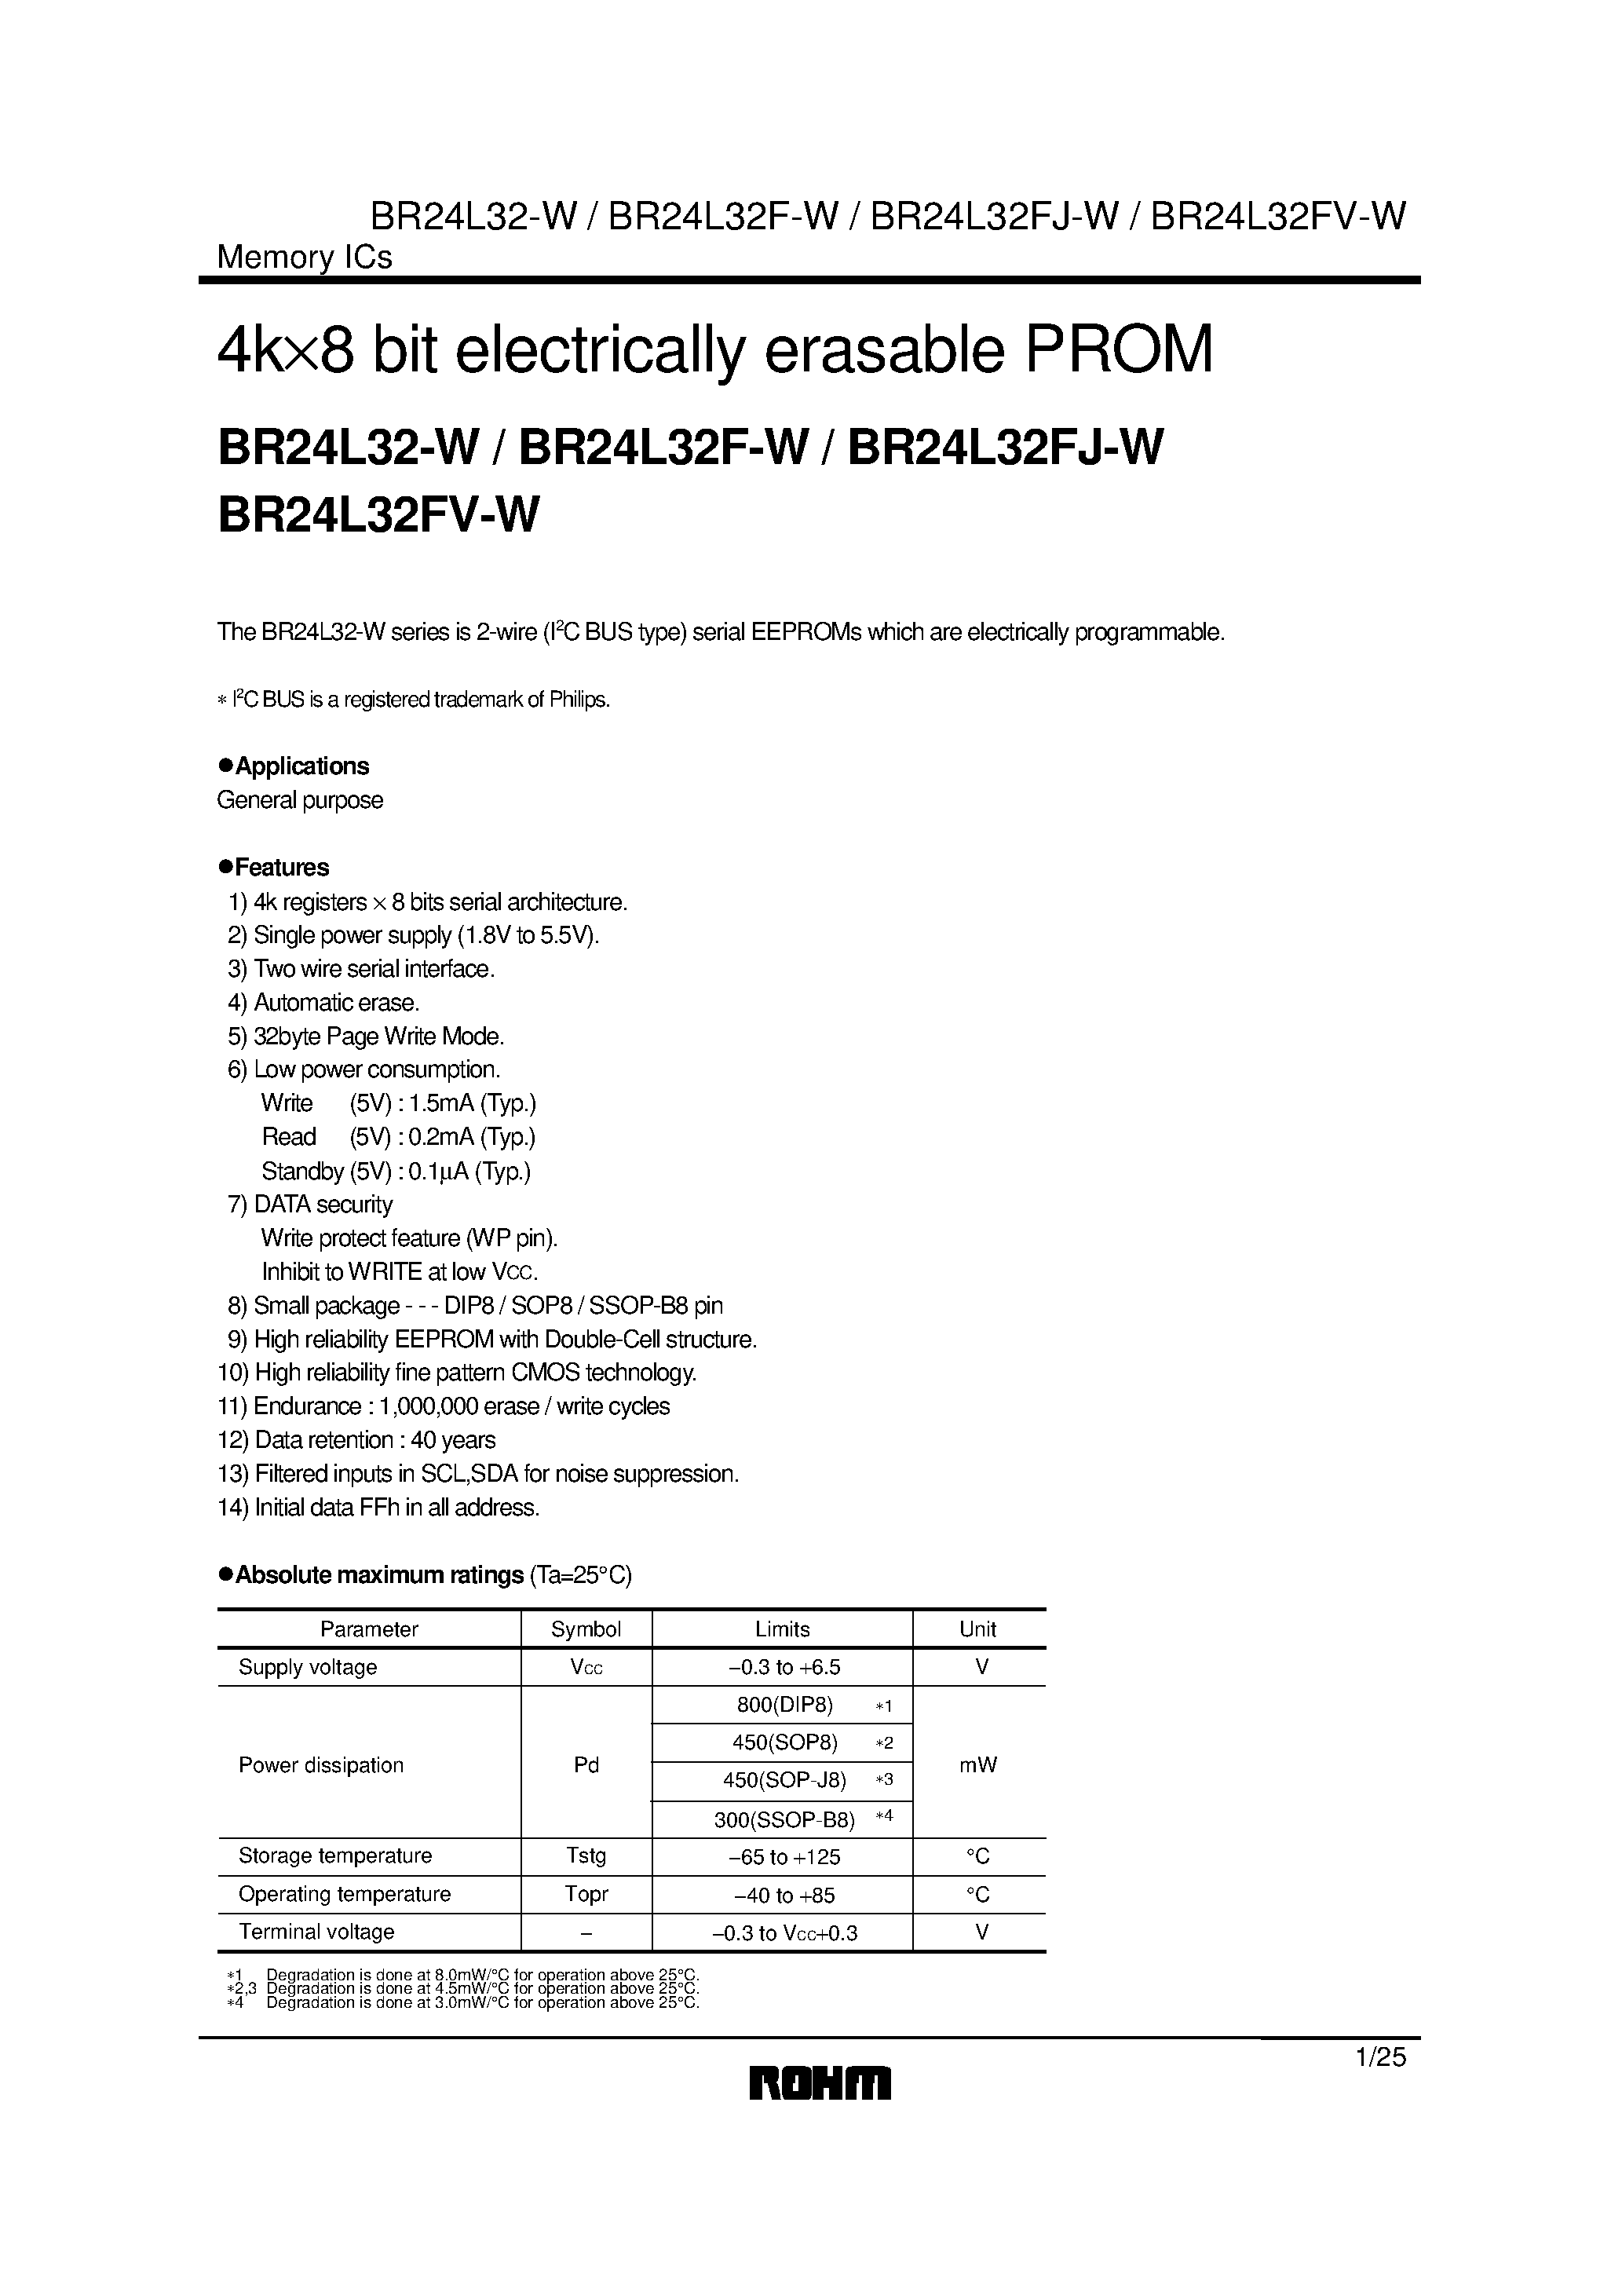 Datasheet BR24L32F-W - 4k8 bit electrically erasable PROM page 1